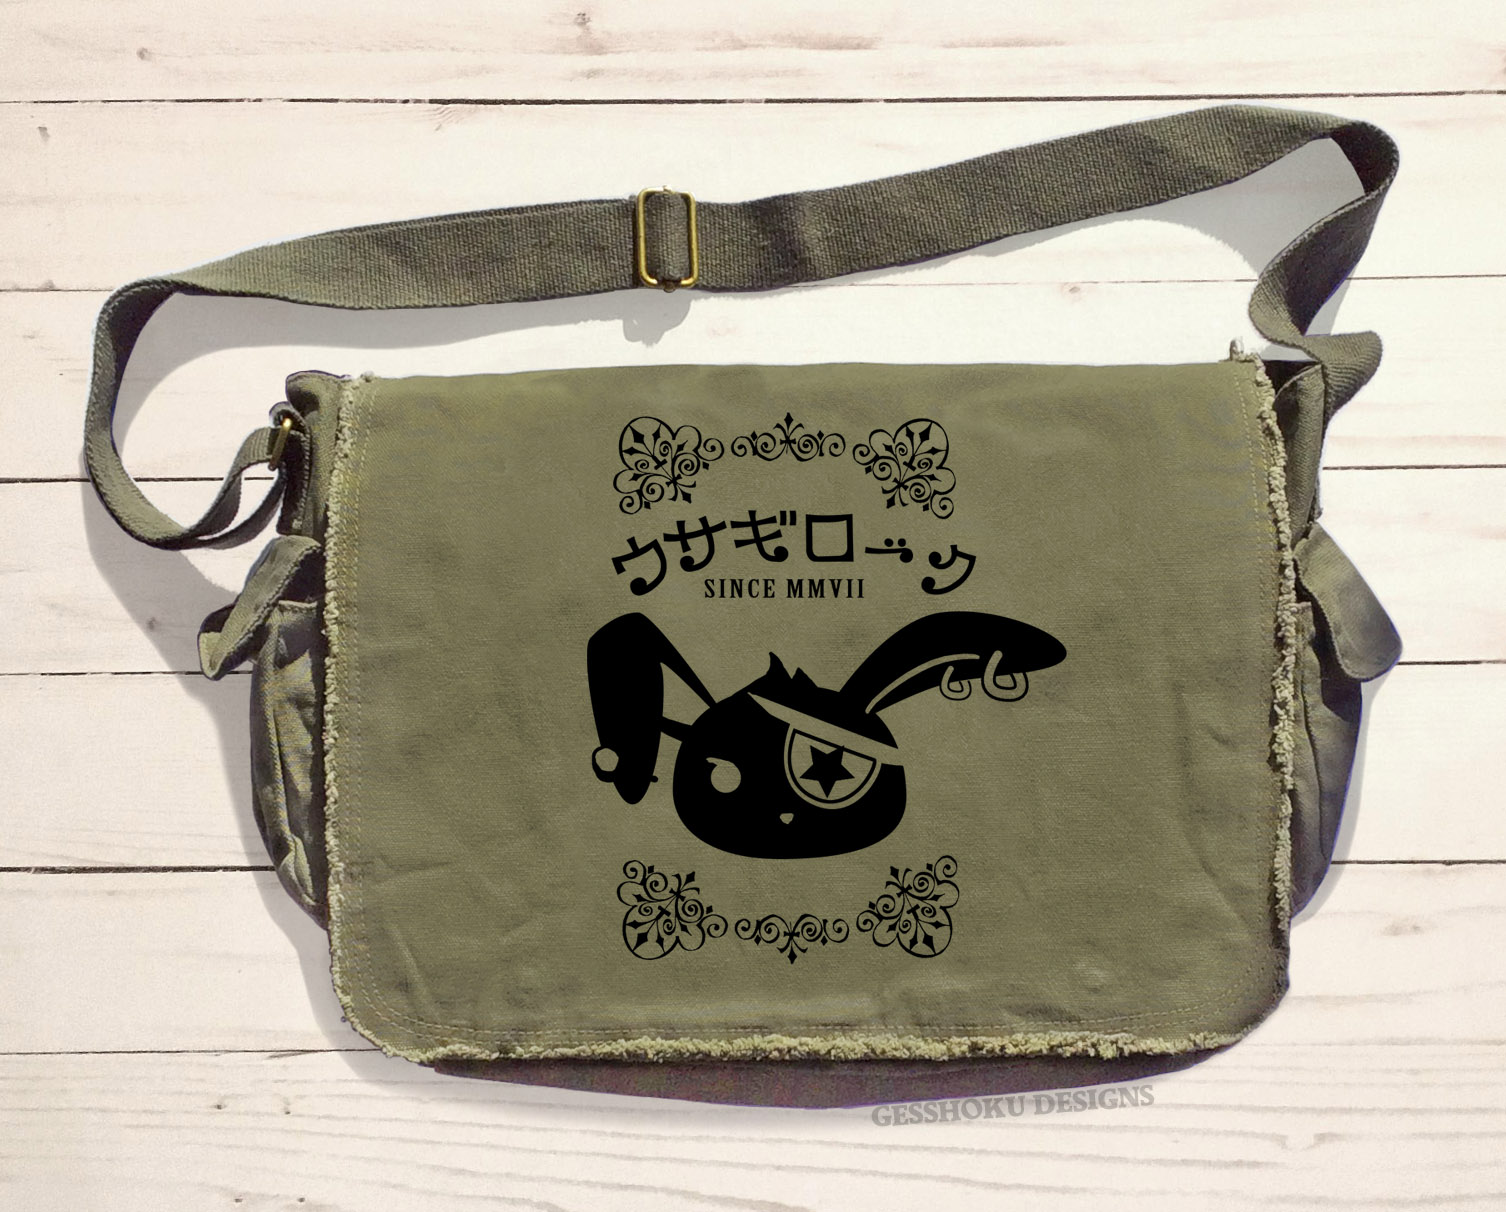 Usagi Rock Jrock Bunny Messenger Bag - Khaki Green